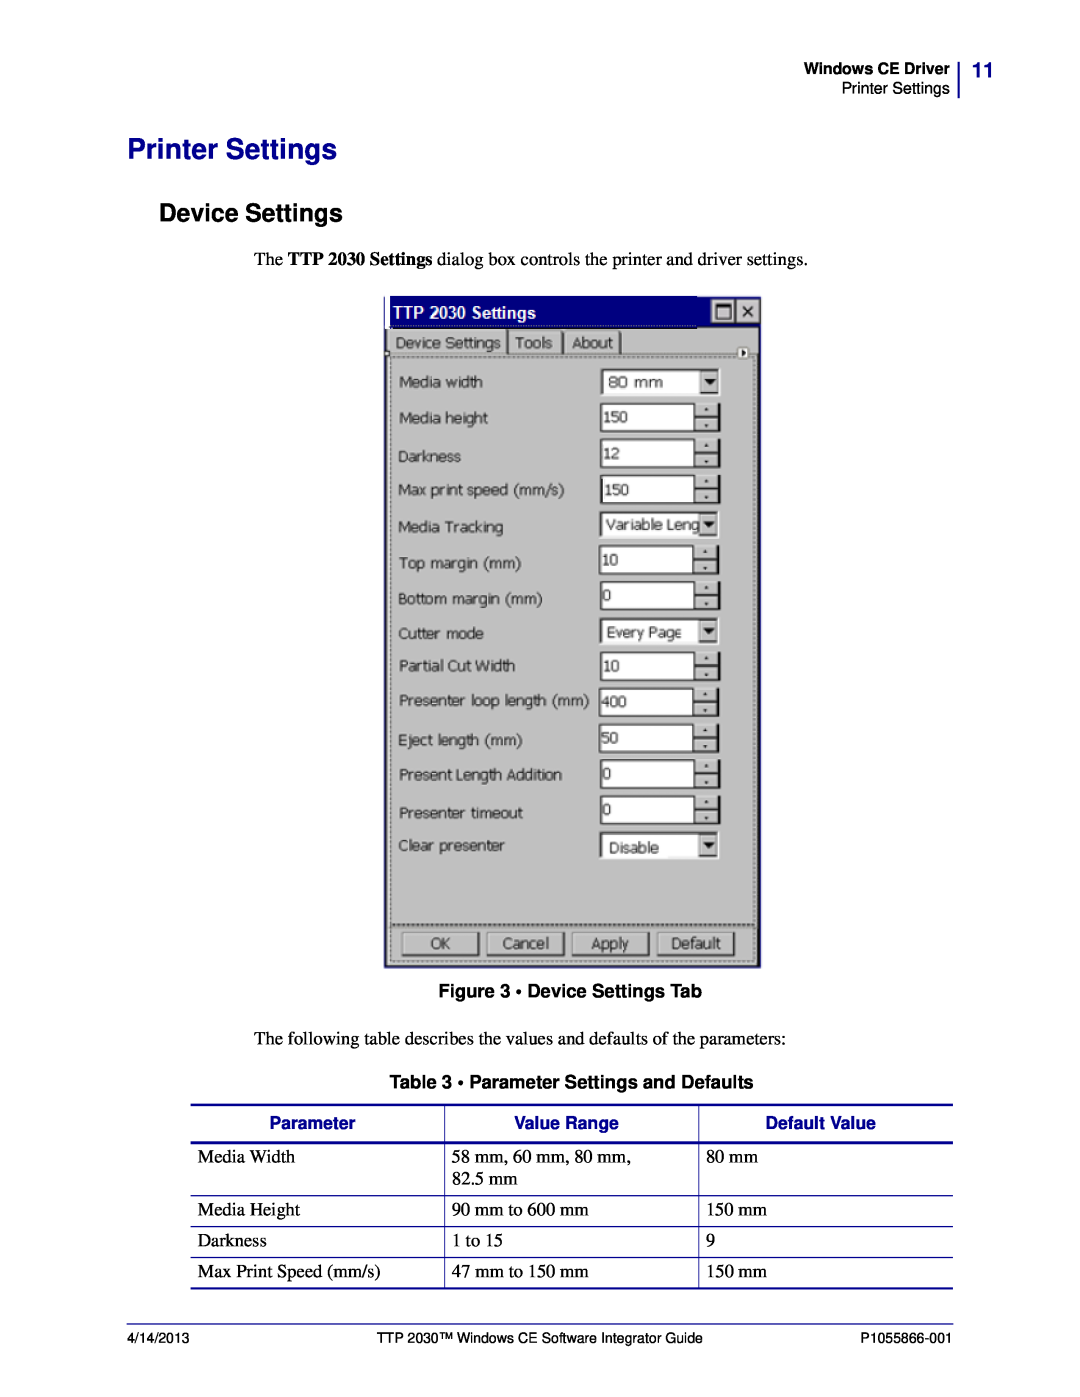 Zebra Technologies TTP 2030 manual Printer Settings, Device Settings Tab, Parameter Settings and Defaults 